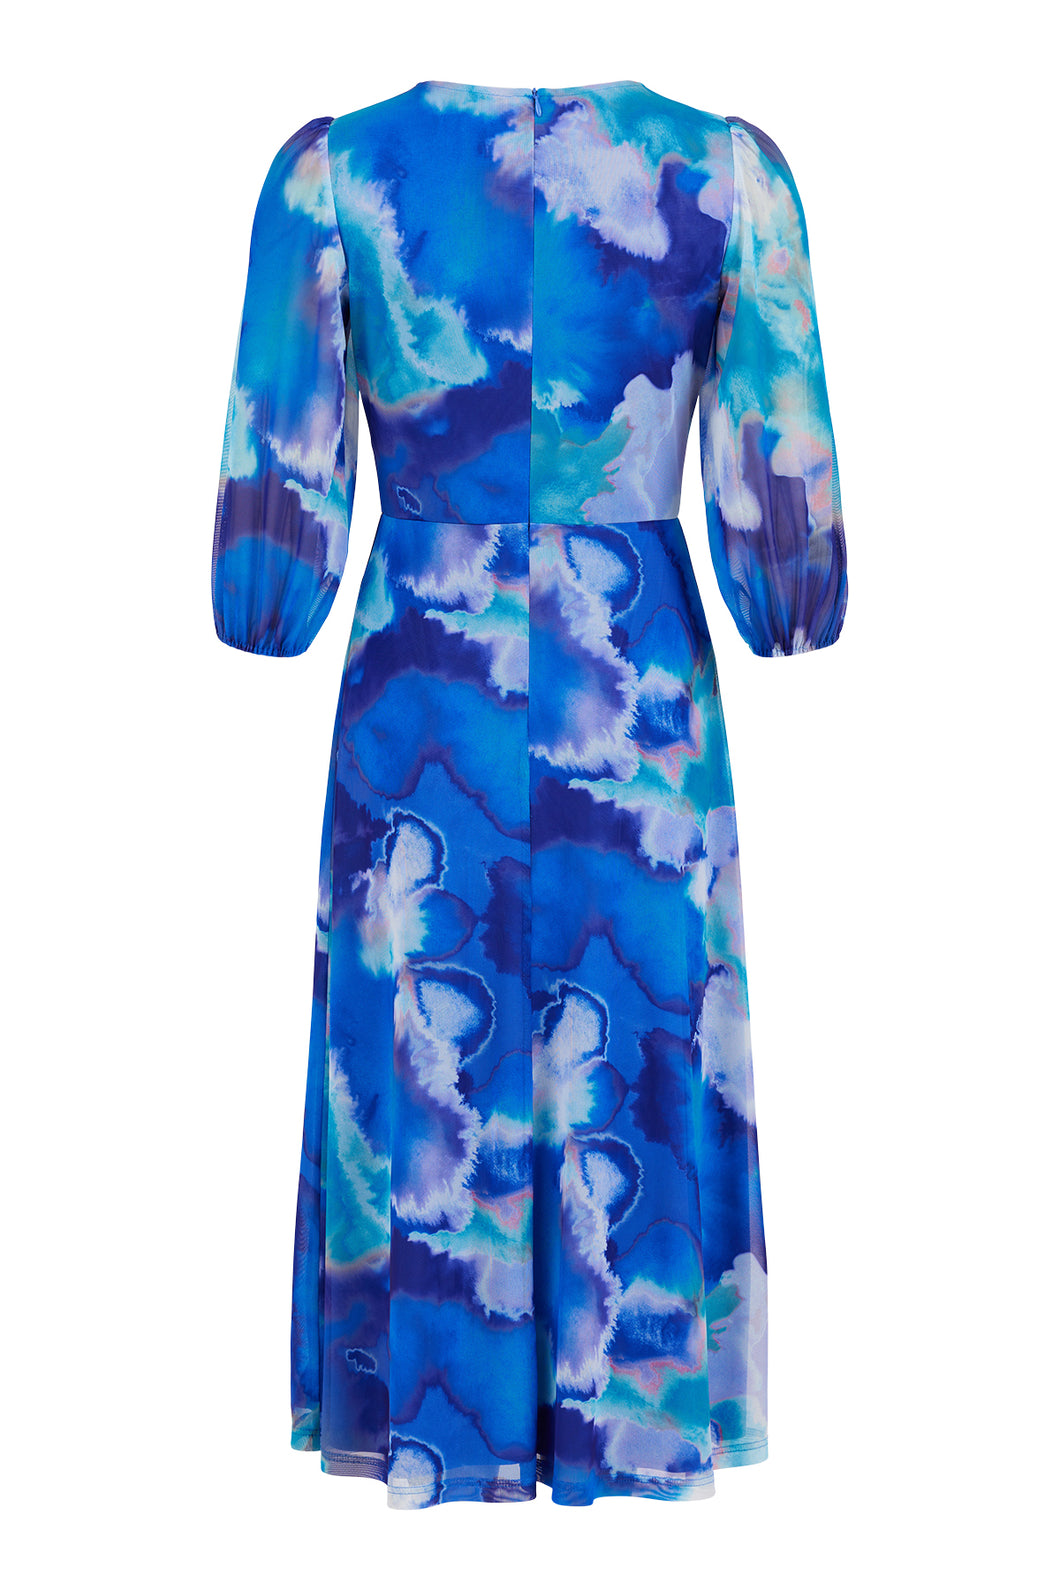 78809-Blue Print Mesh Dress-Tia